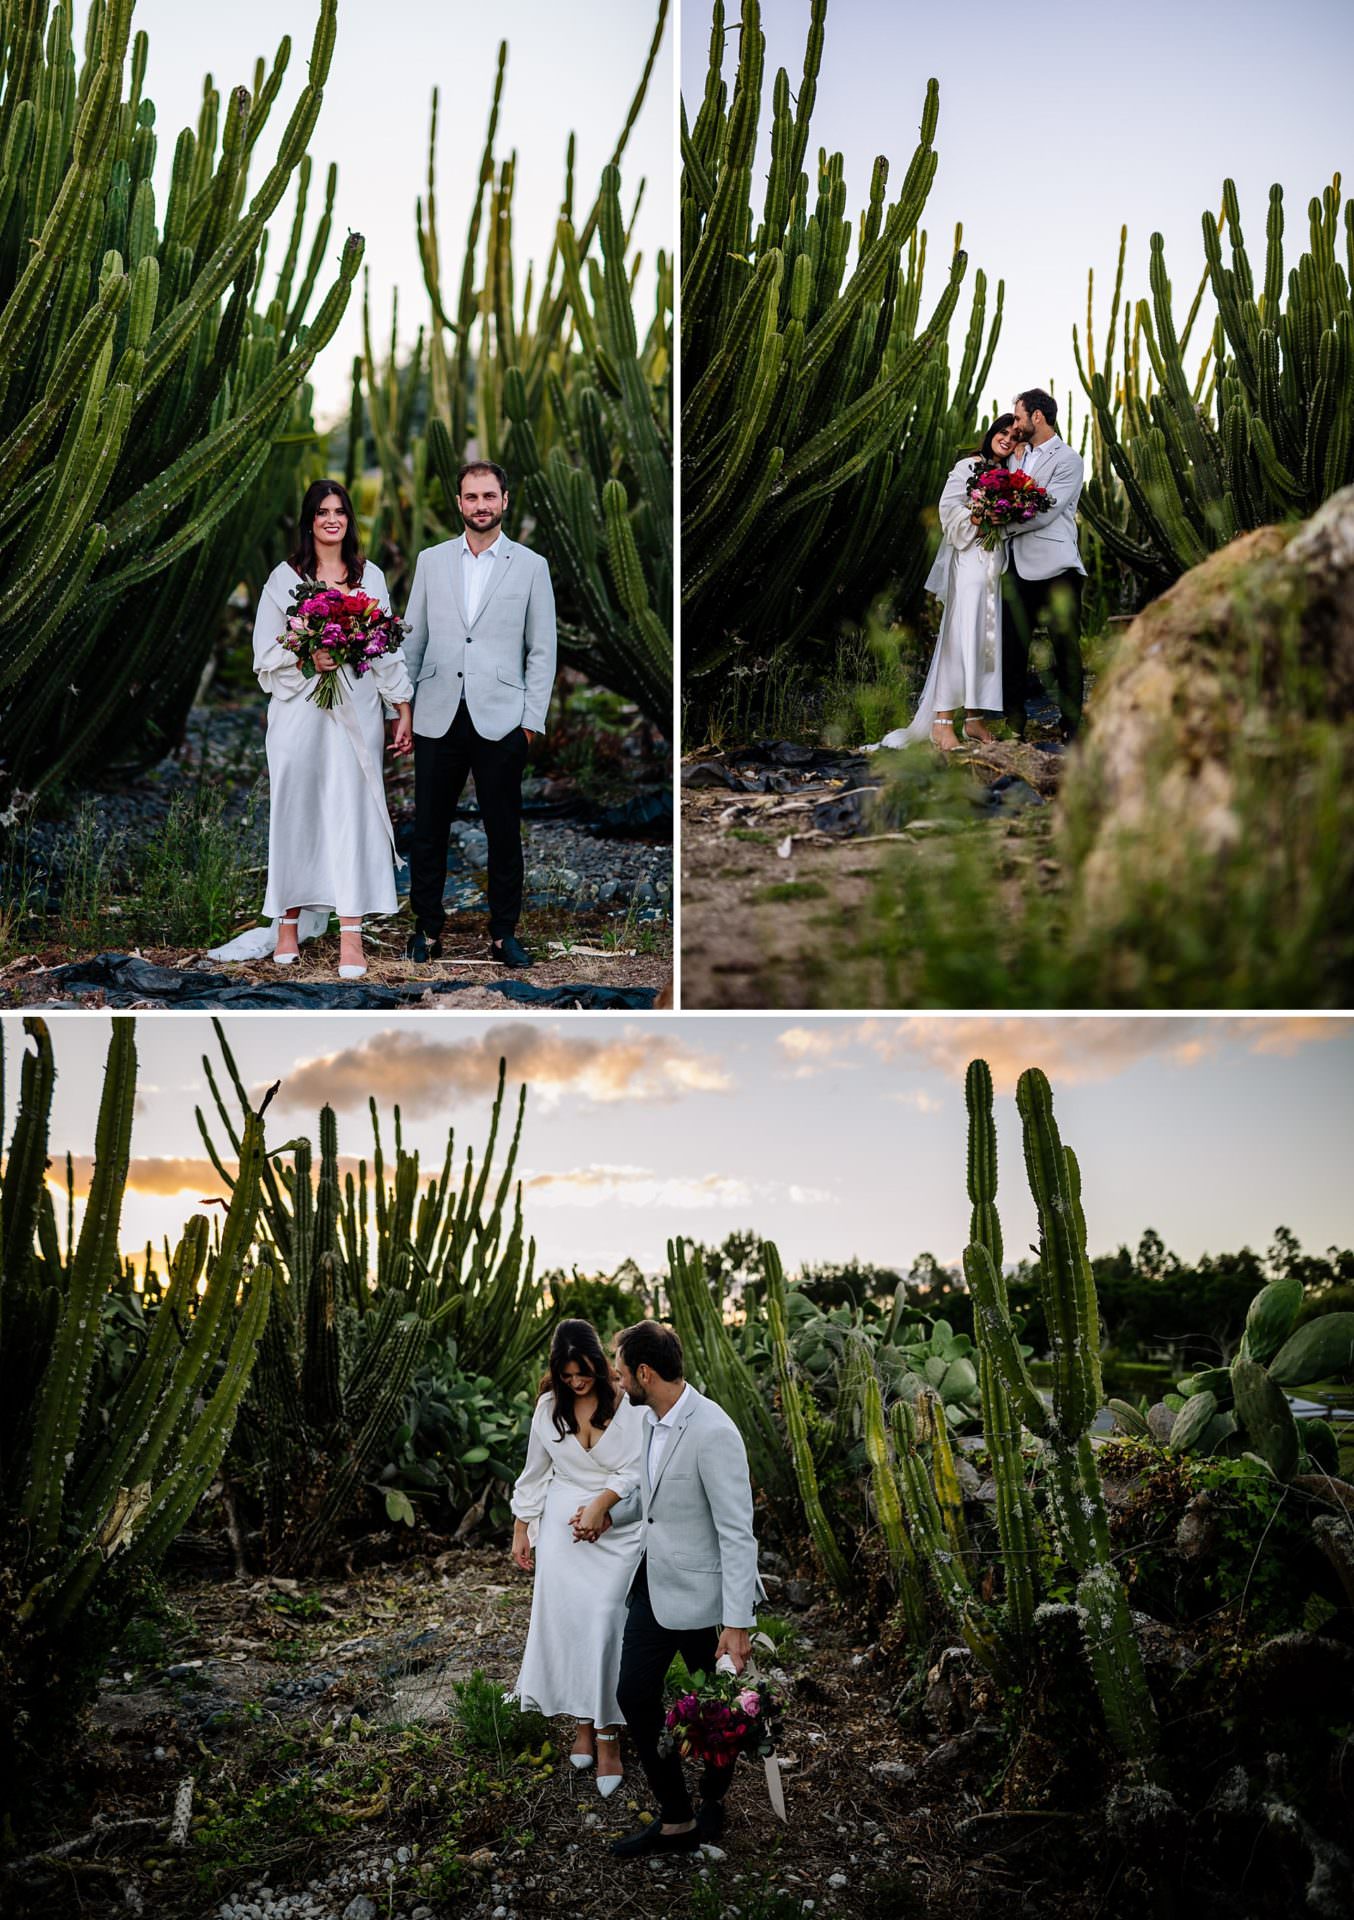 Hamilton Cactus Garden wedding photo of bride and groom at sunset